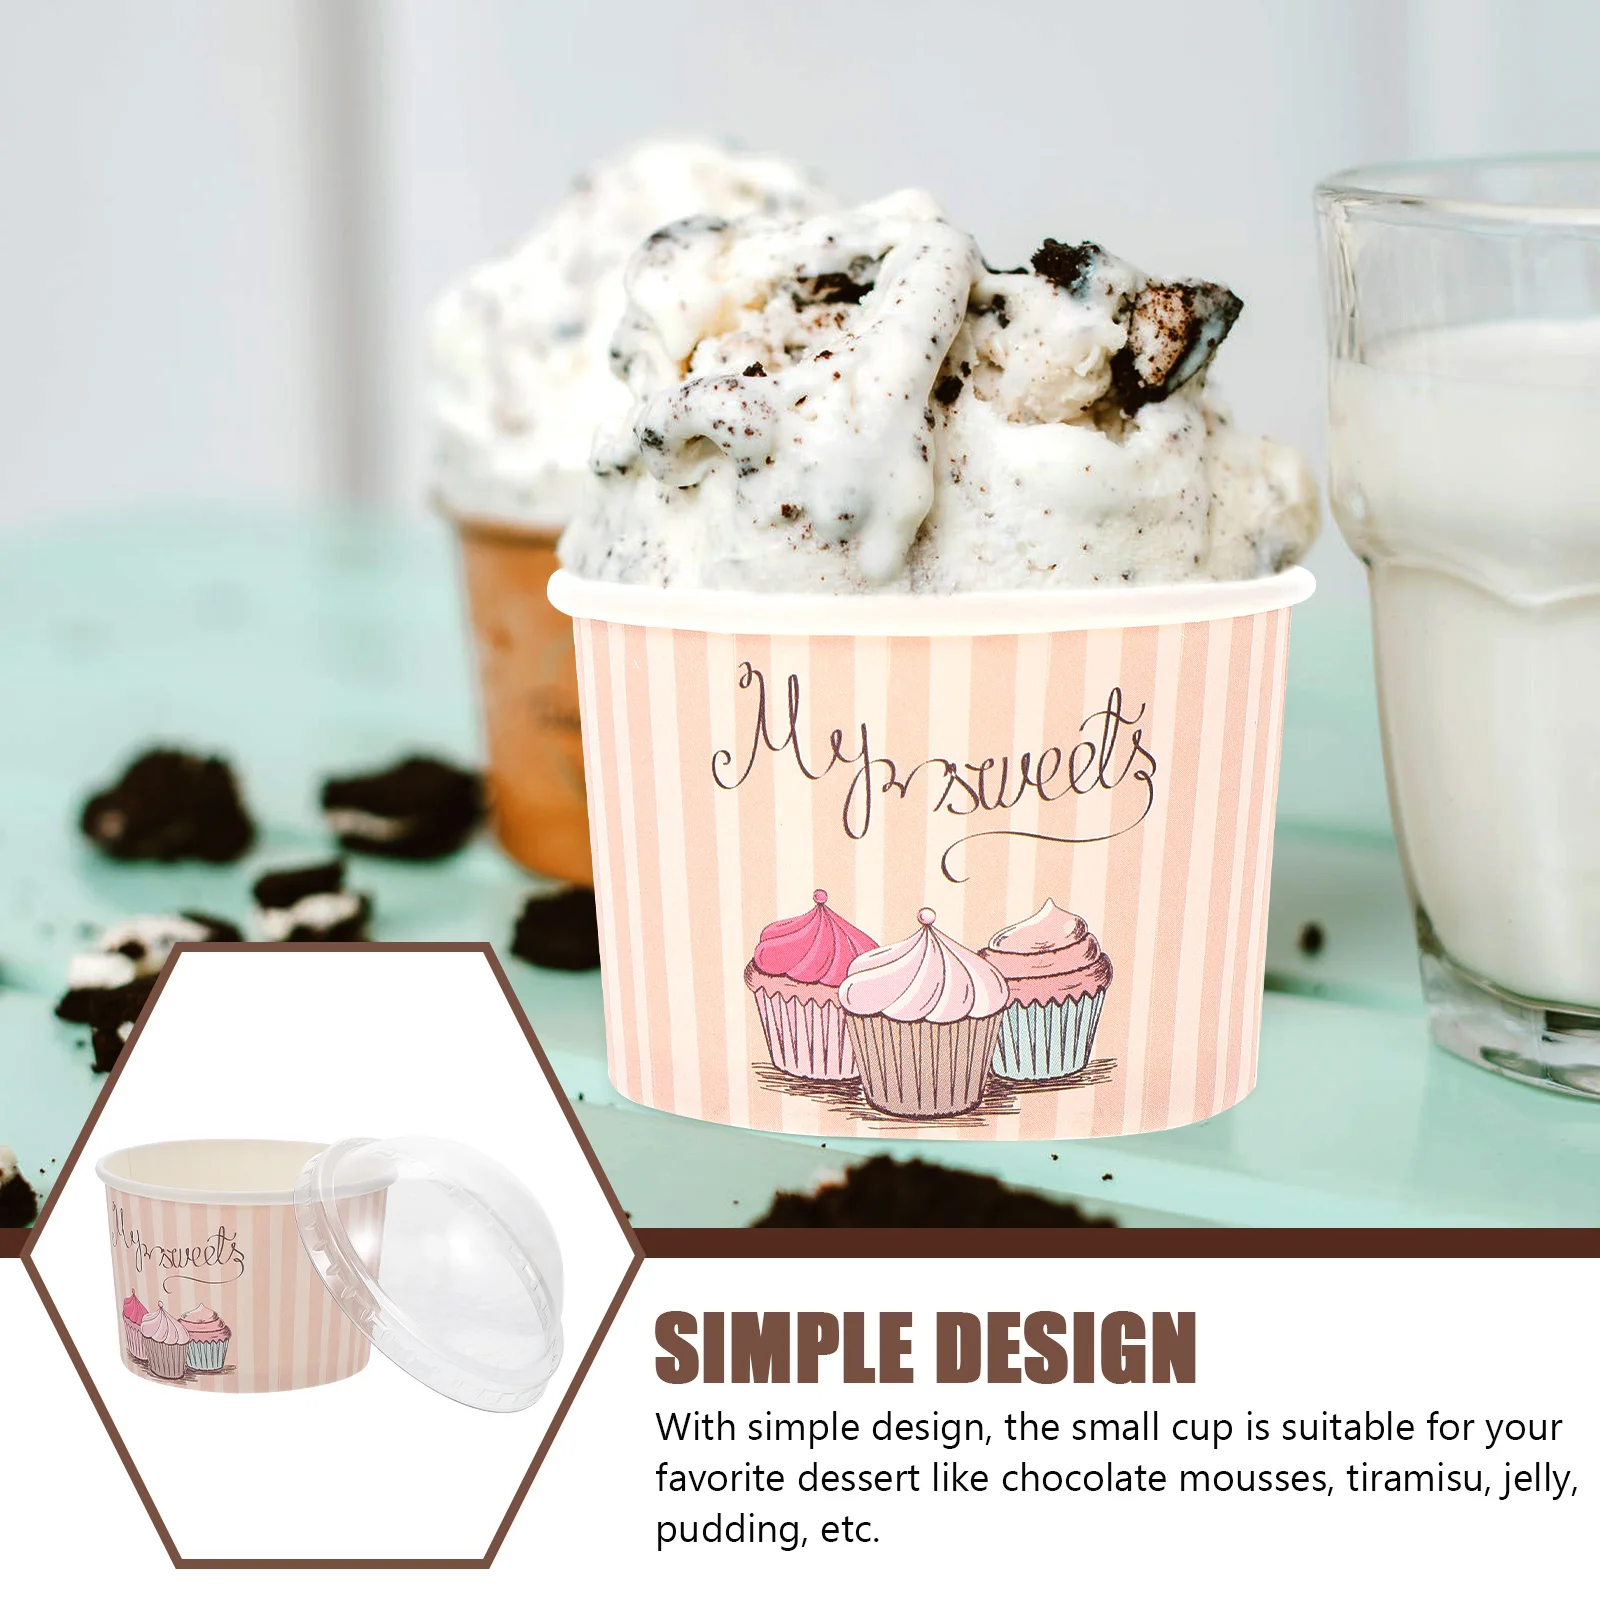 https://ae01.alicdn.com/kf/S9e5f581245114765baa0fdeb1f92c268r/Paper-Cups-Cup-Cream-Ice-Dessert-Bowls-Bowl-Yogurt-Disposable-Cake-Sundae-Pudding-Container-Treat-Lids.jpg